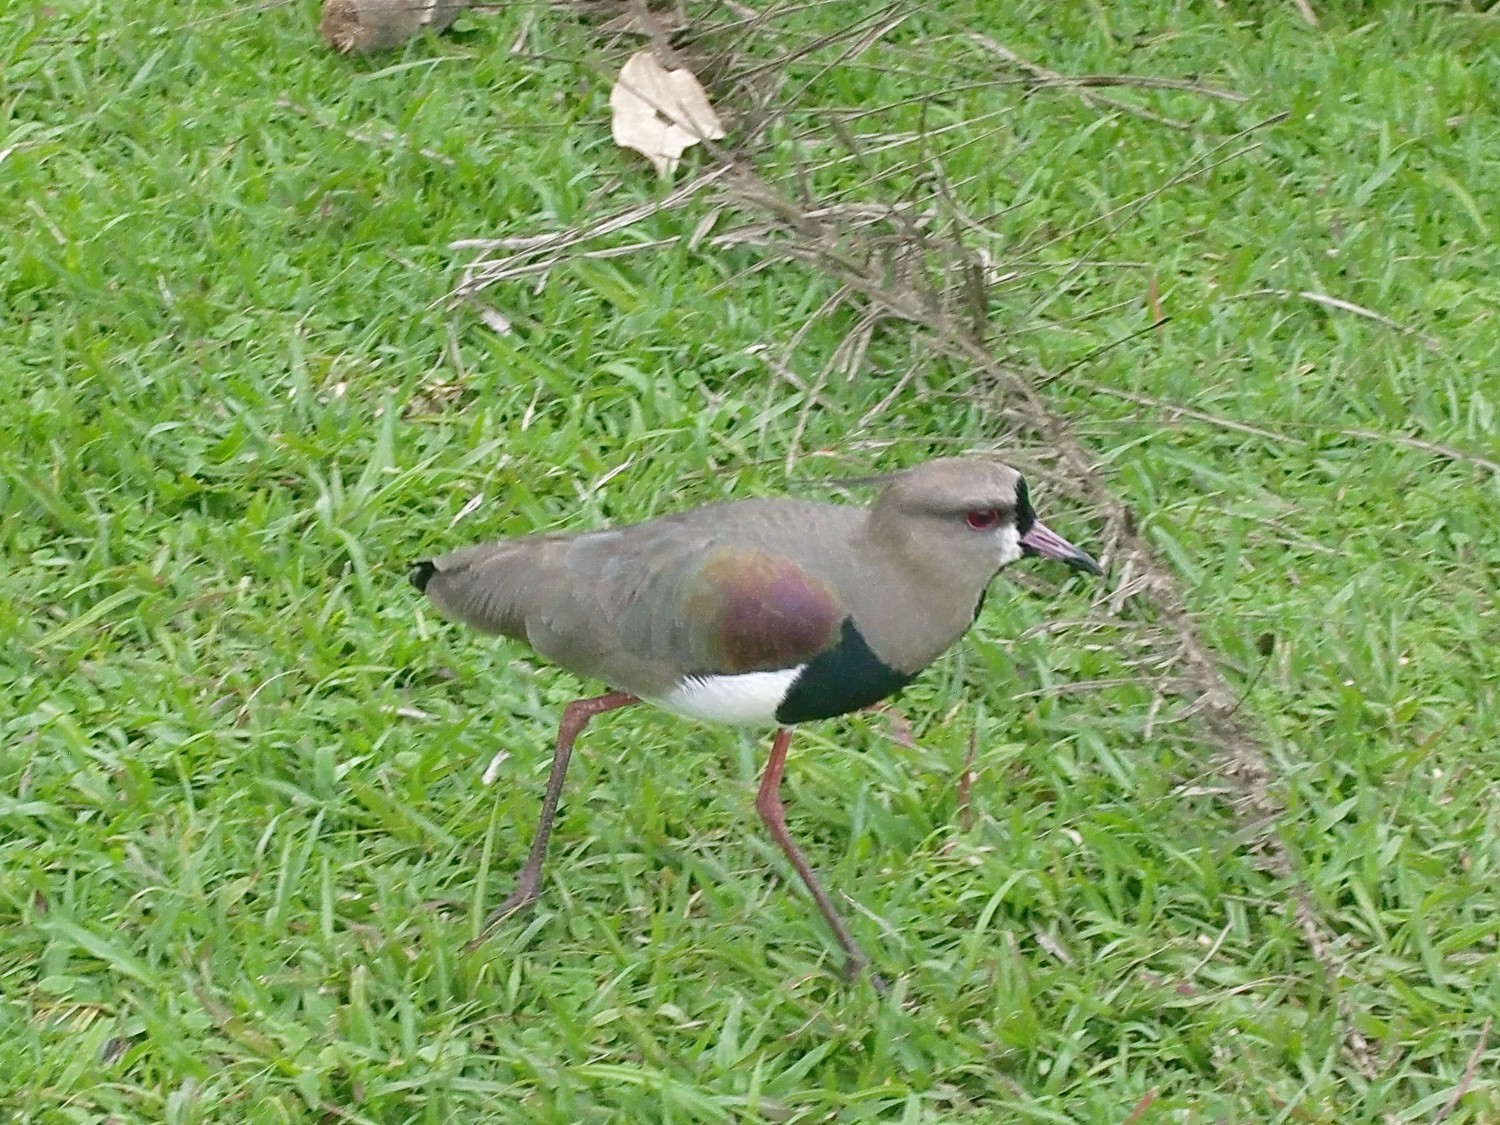 Anther beautiful bird ib the Iguazu Park